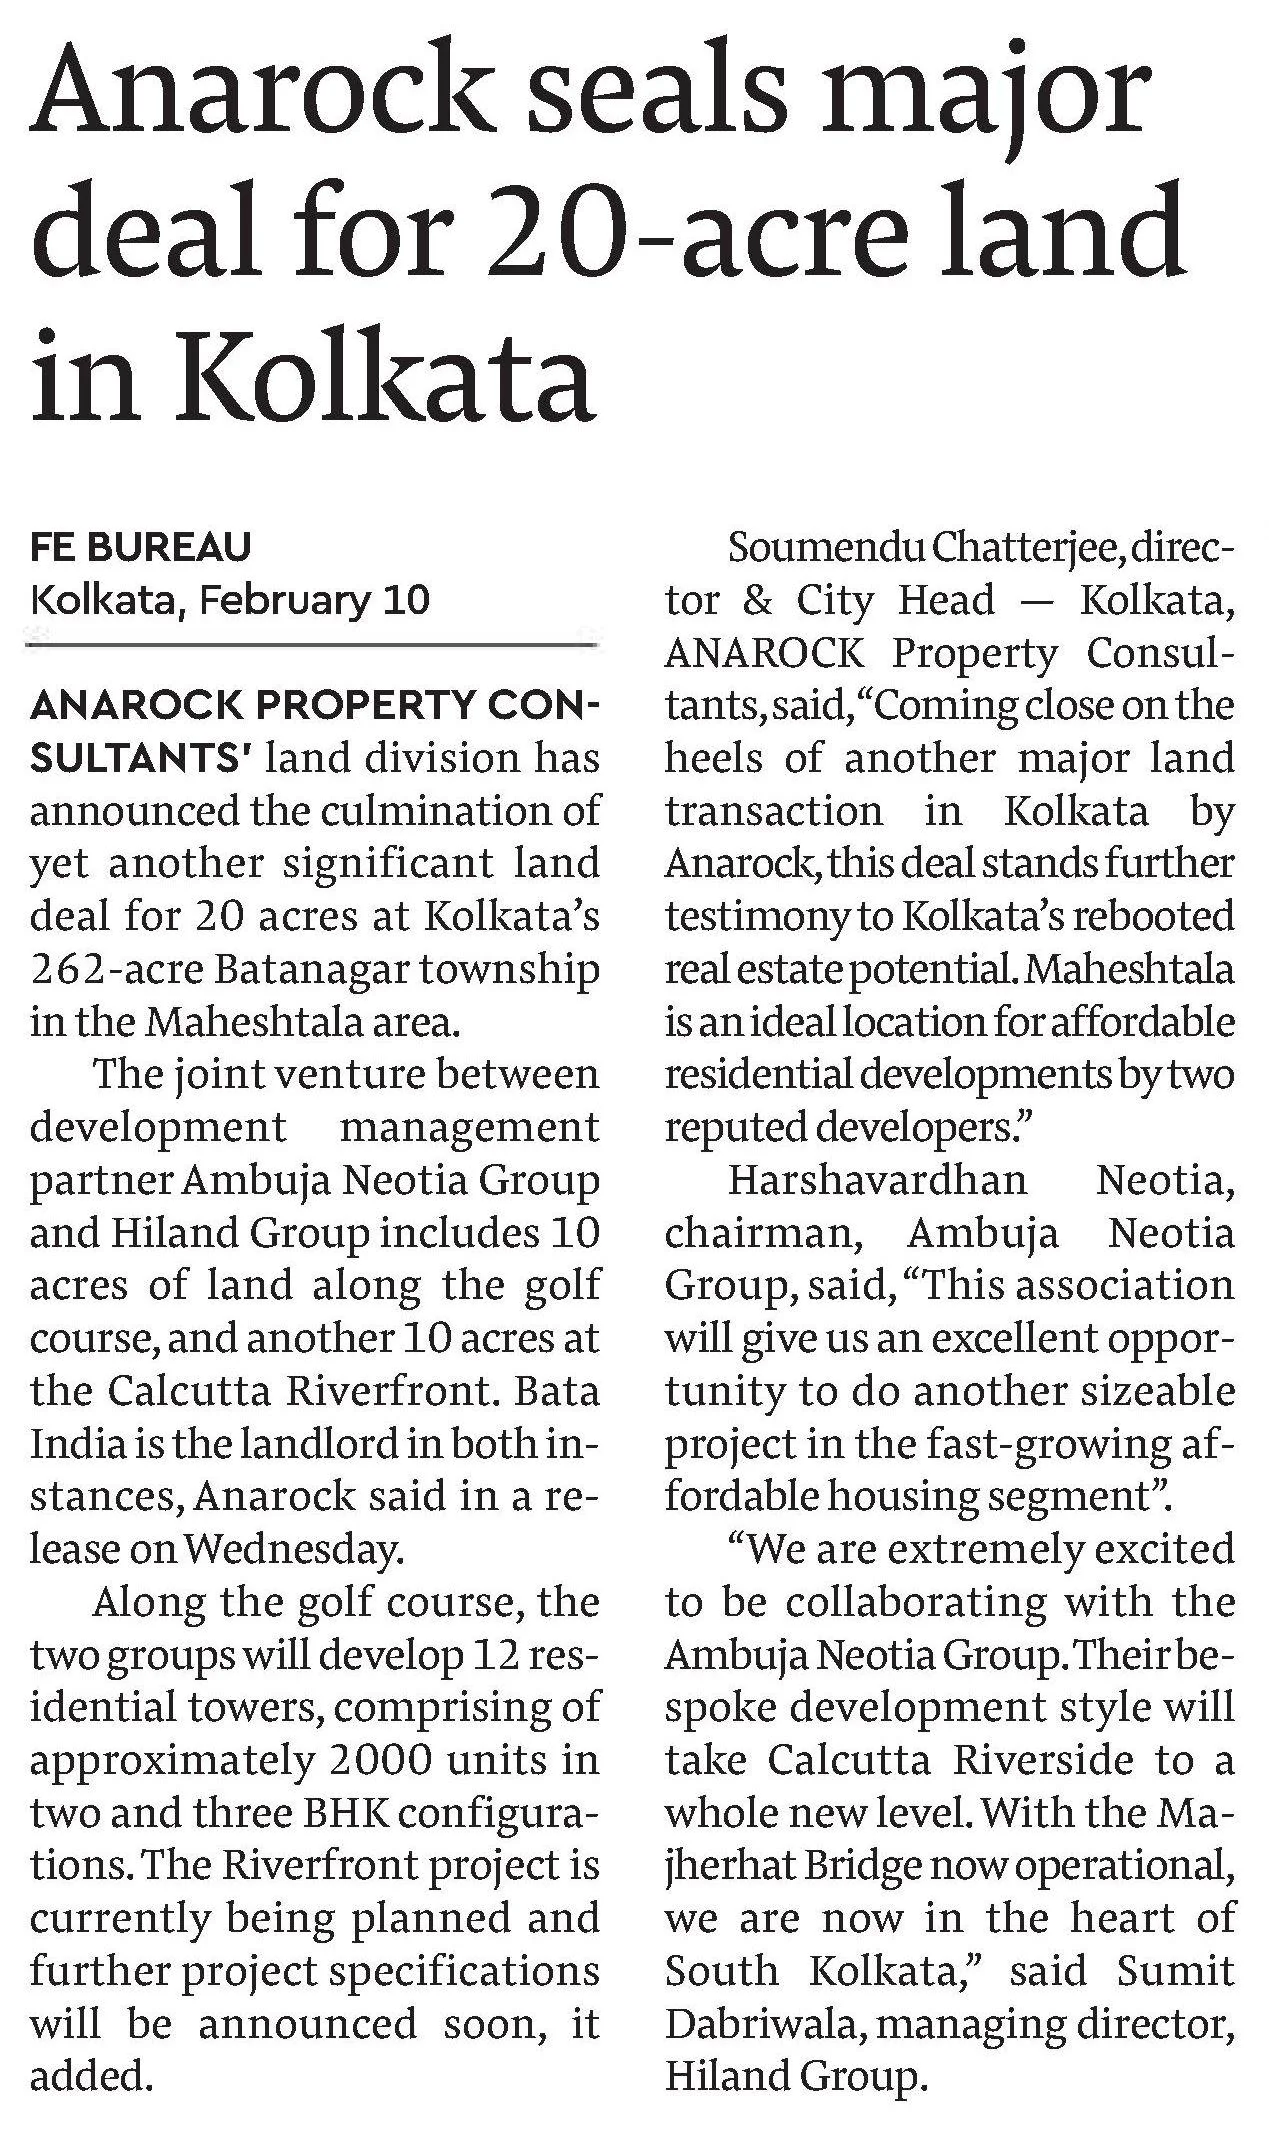 Anarock Seals Major deal for 20-Acre Land in Kolkata